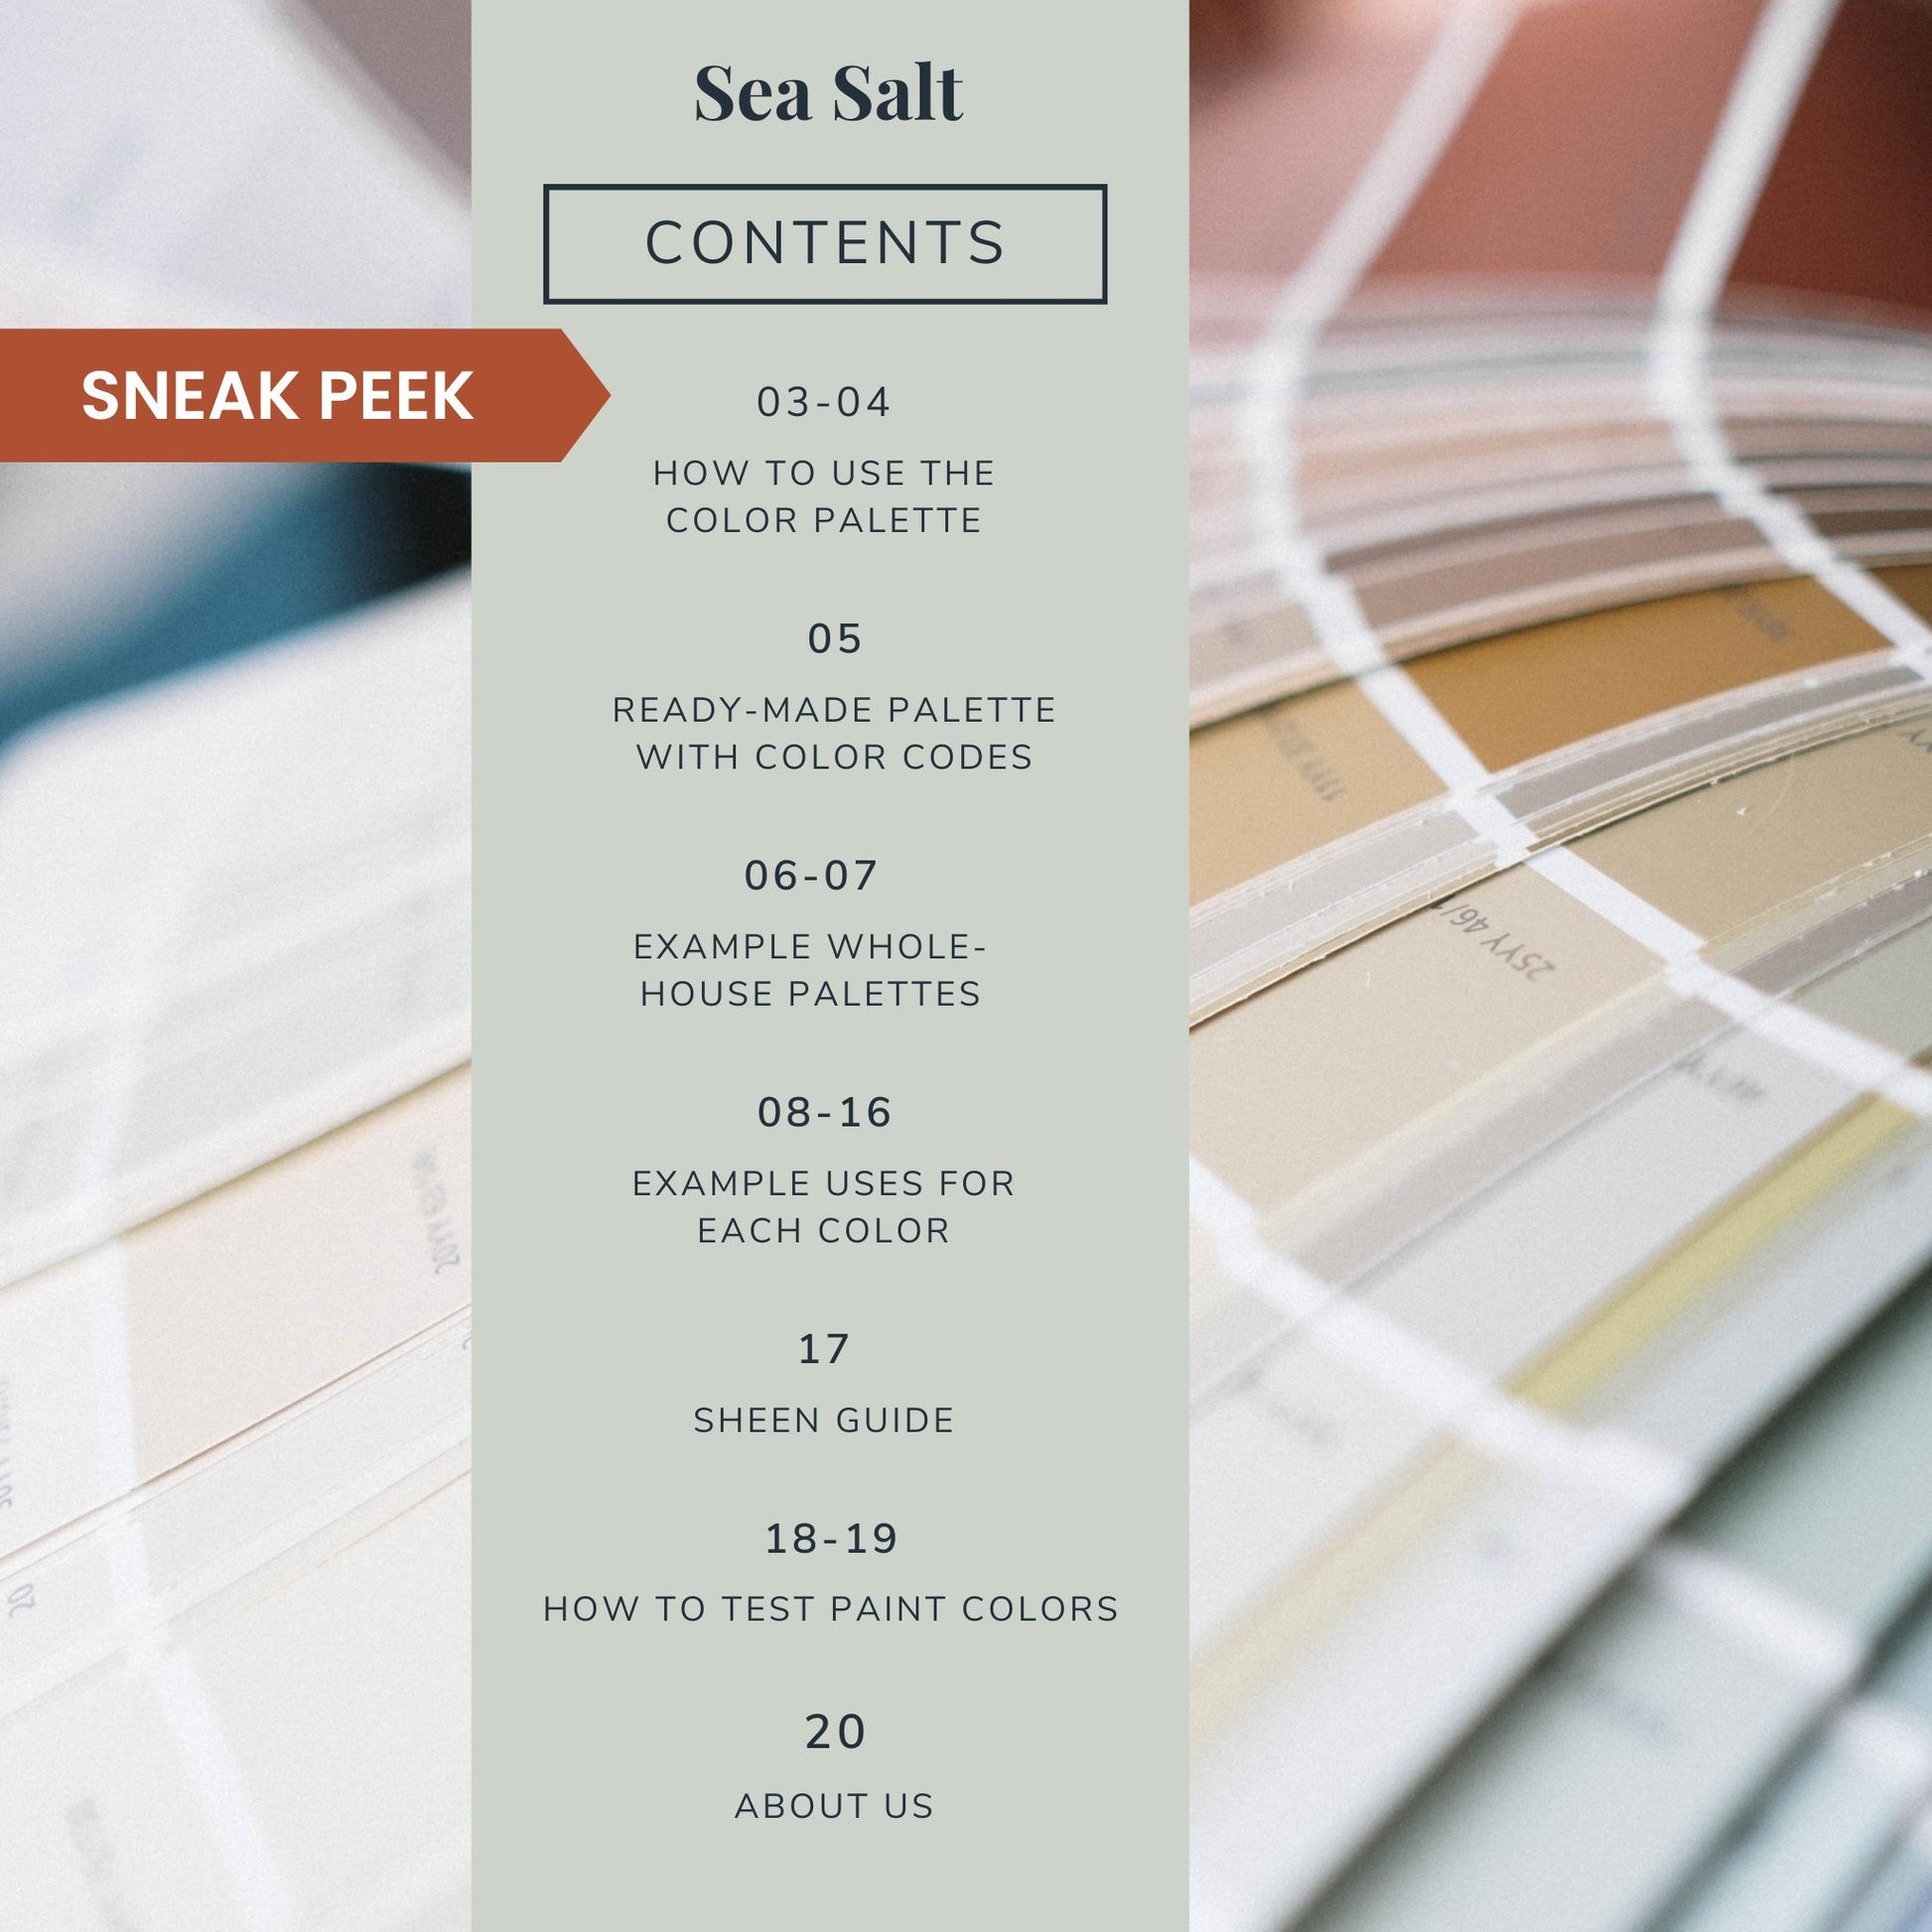 Contents list for a Sherwin-Williams Sea Salt color palette guide